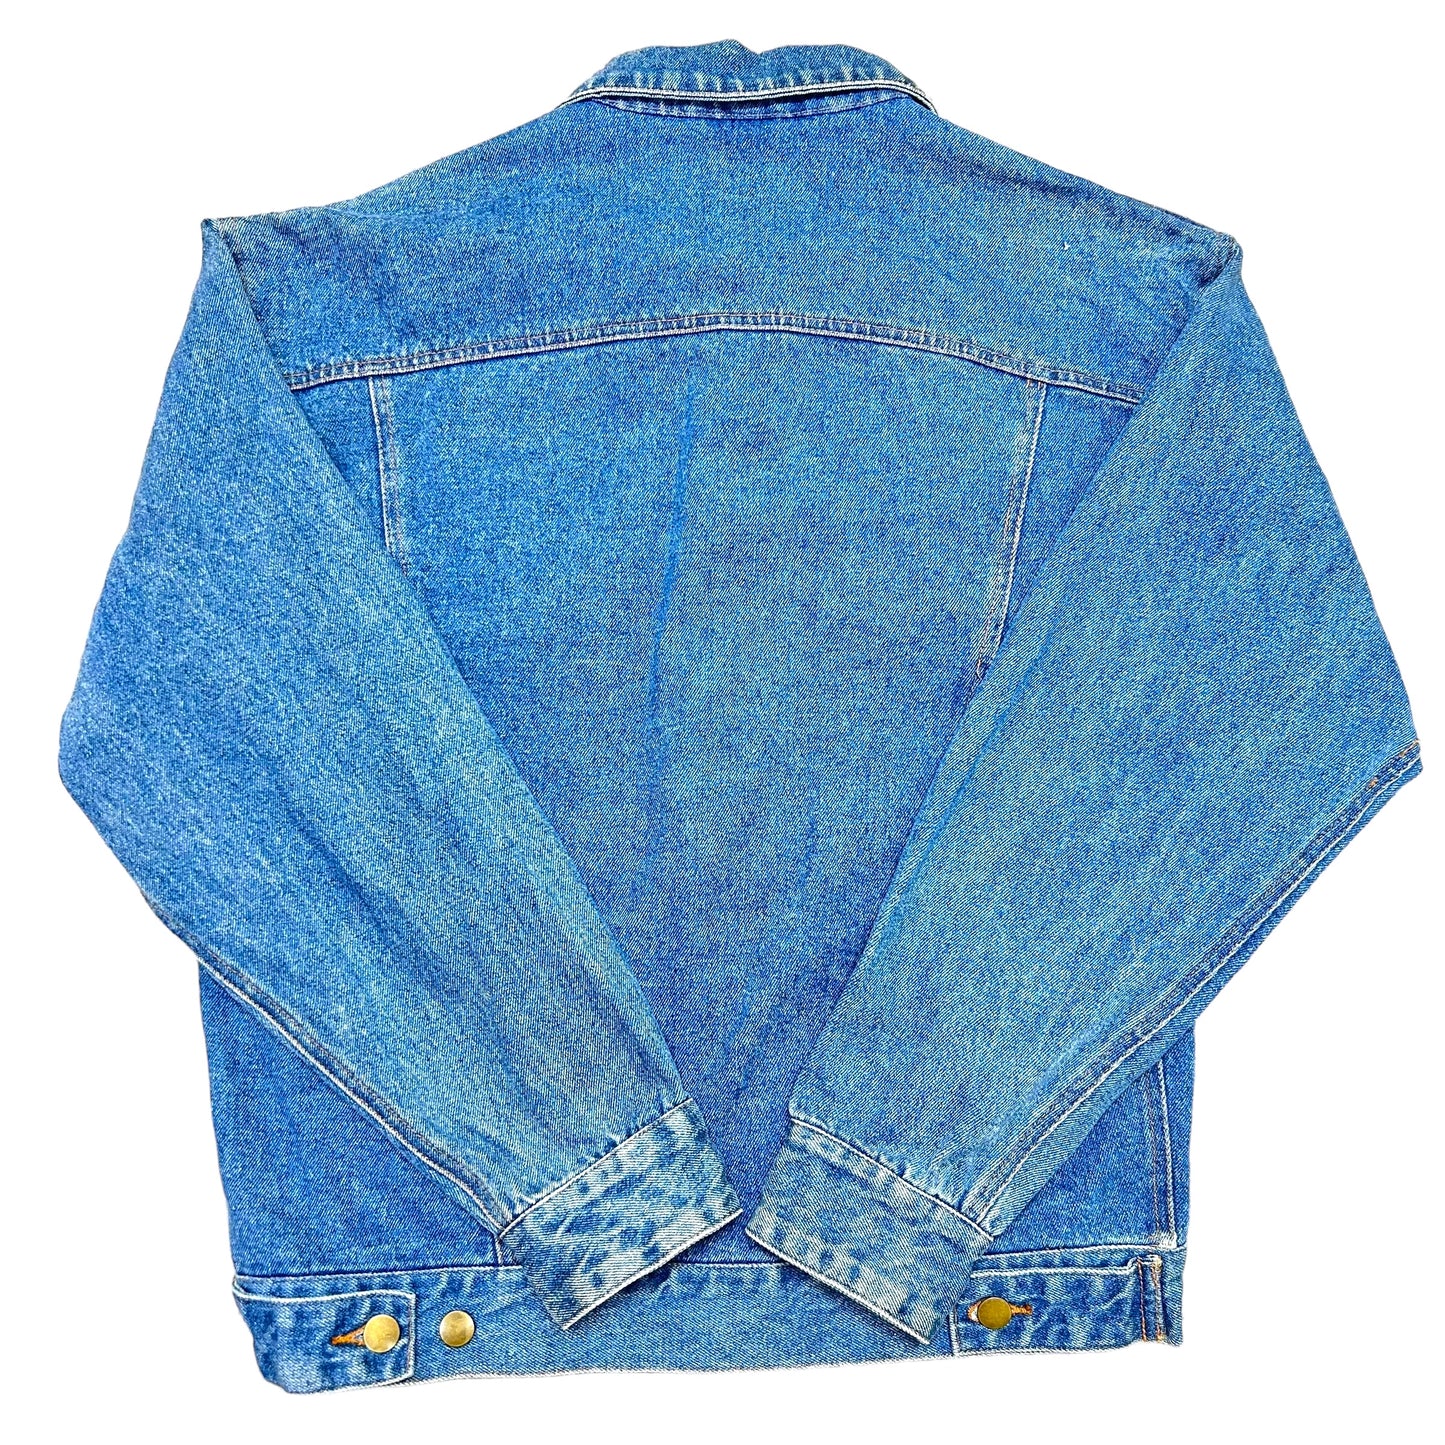 Vintage 1990s Blue Creek Jeans Light Wash Denim/Leather Button Up Jacket - Size Small